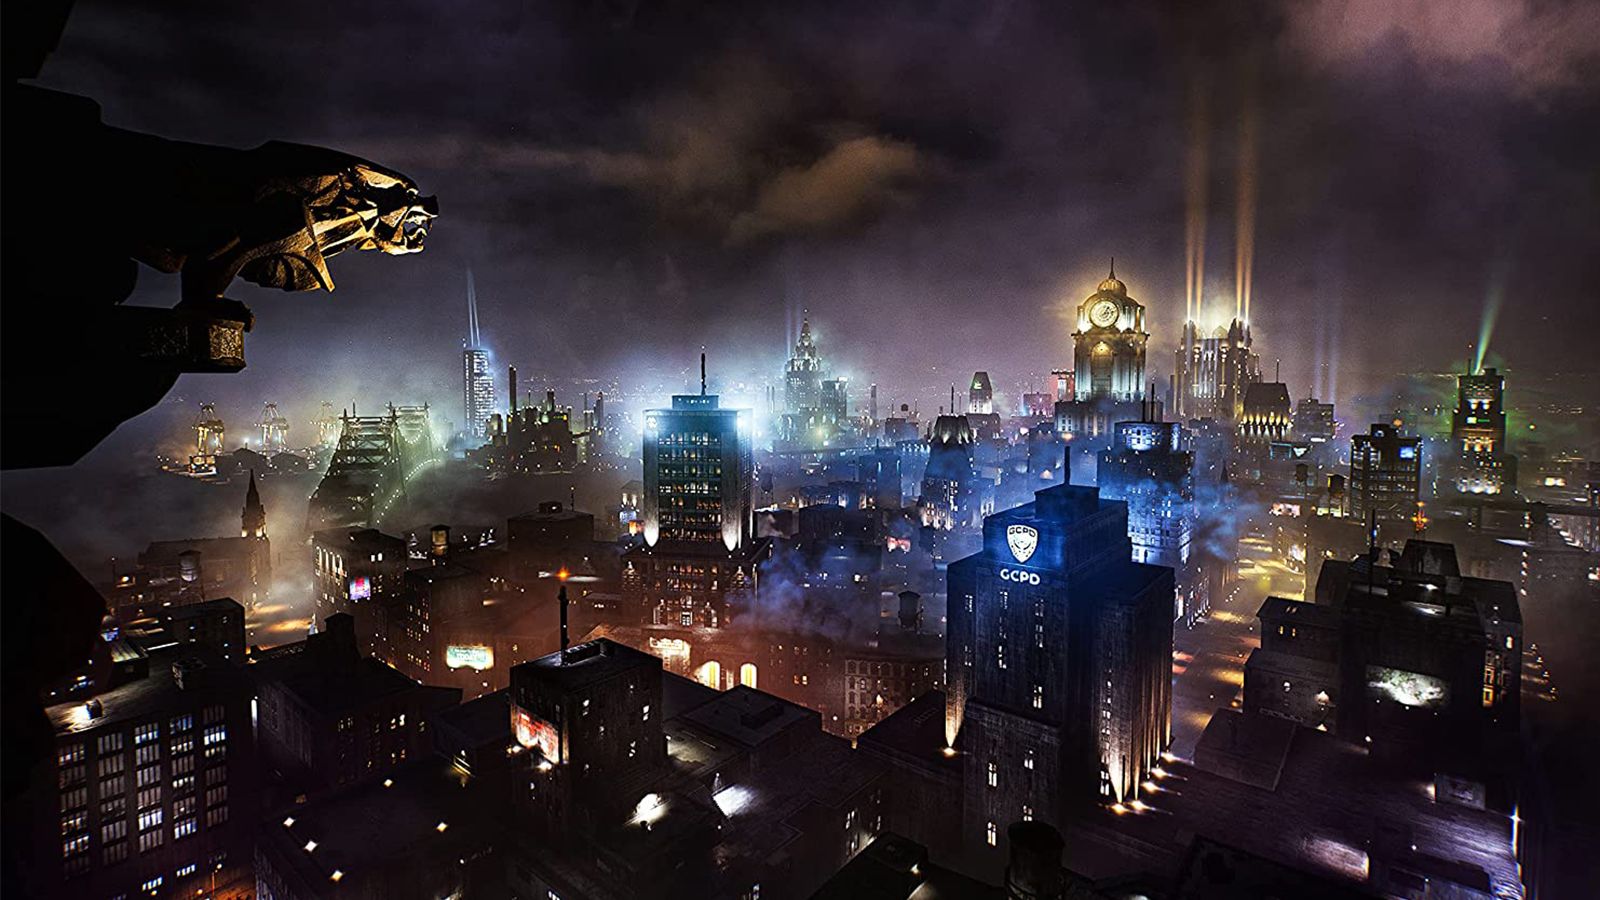 Gotham Knights - PS5 Review - Thumb Culture